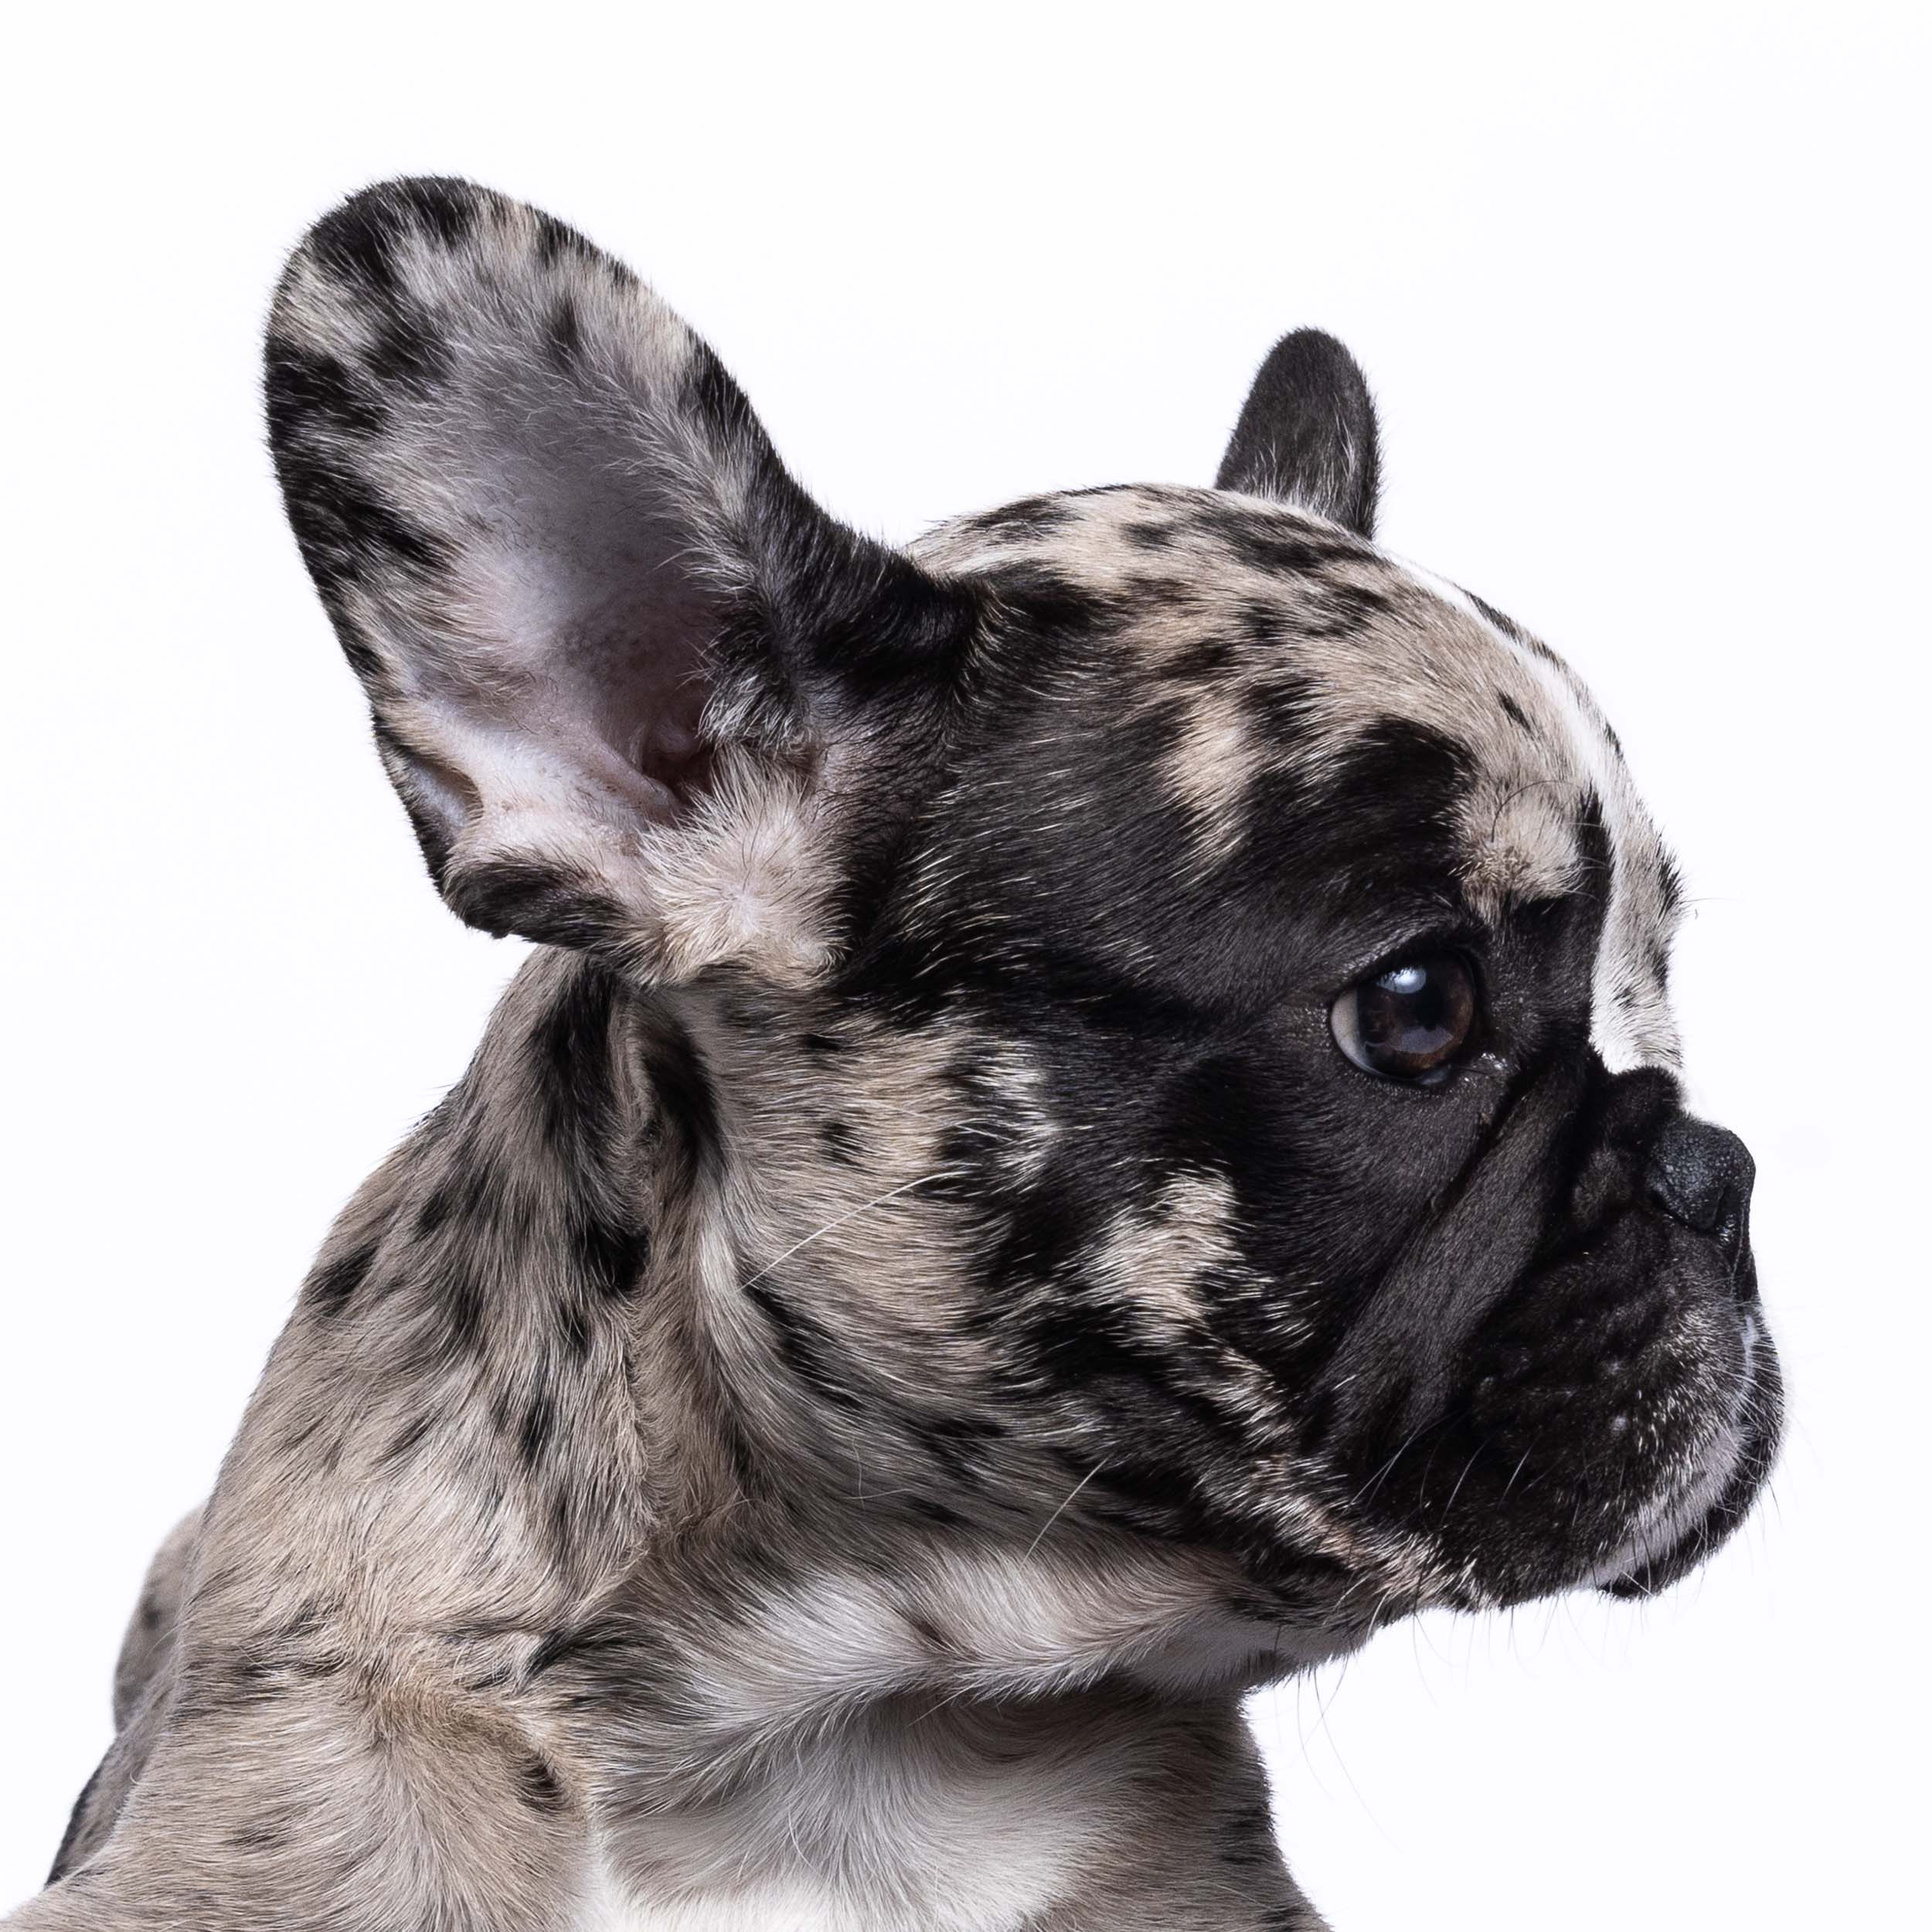 Dog Studio Photography | French Bulldog Puppy in Profile